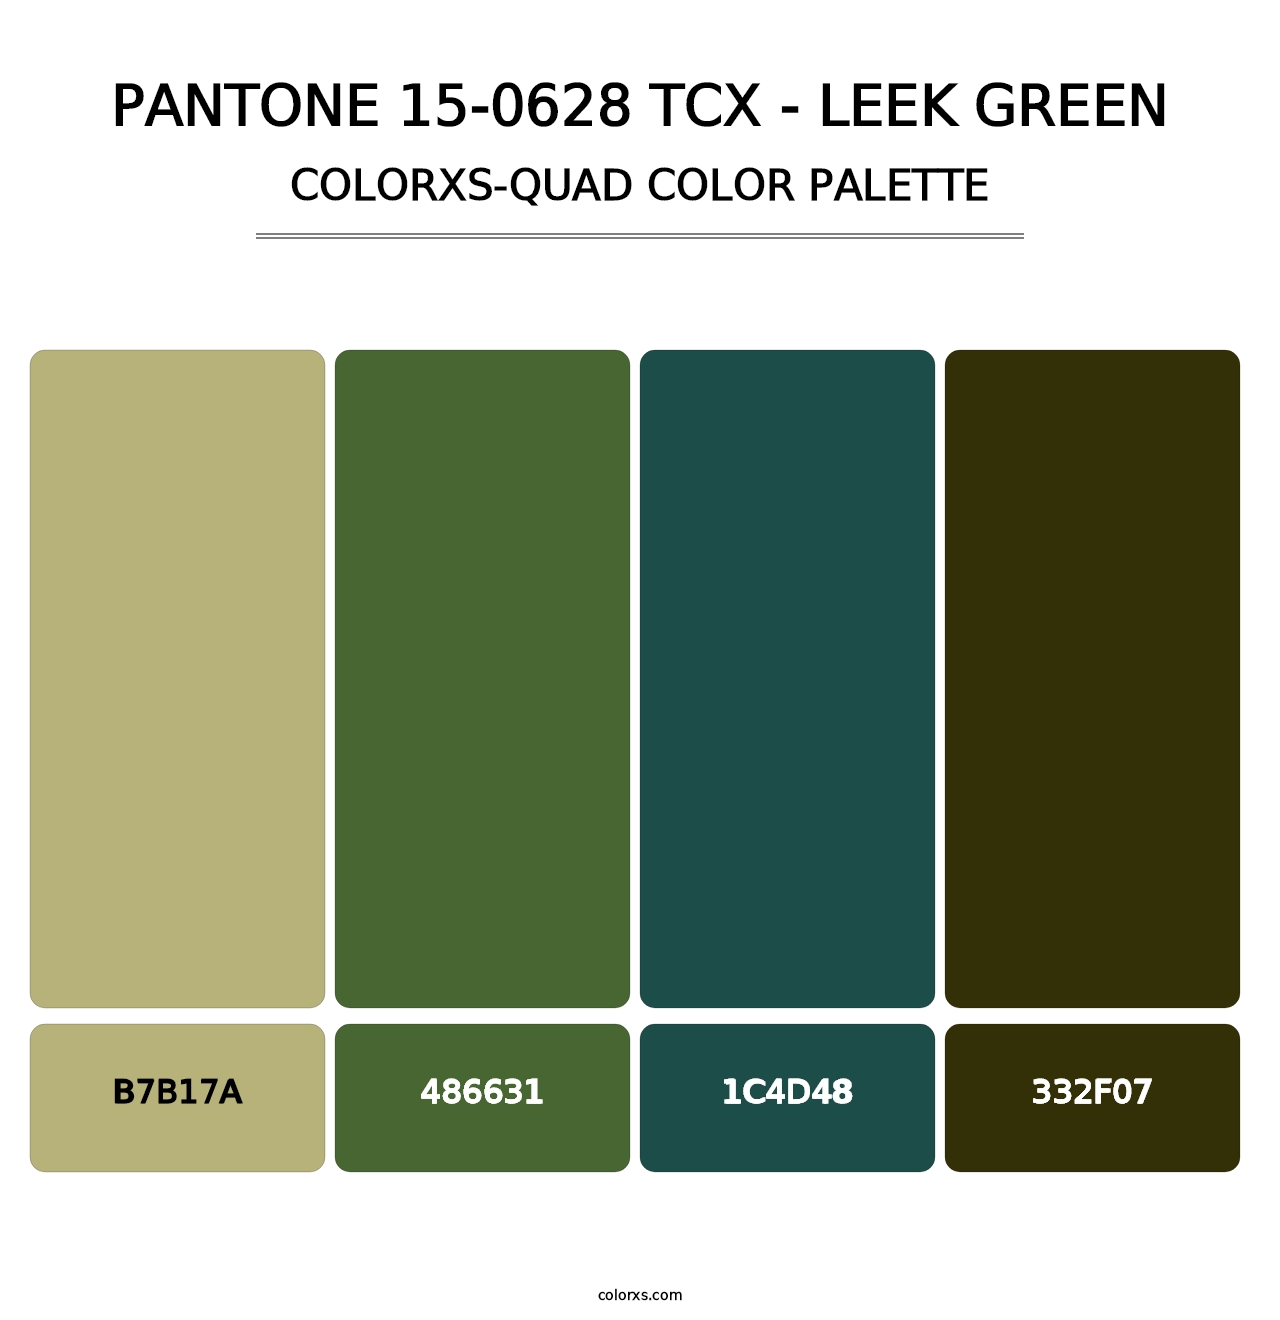 PANTONE 15-0628 TCX - Leek Green - Colorxs Quad Palette